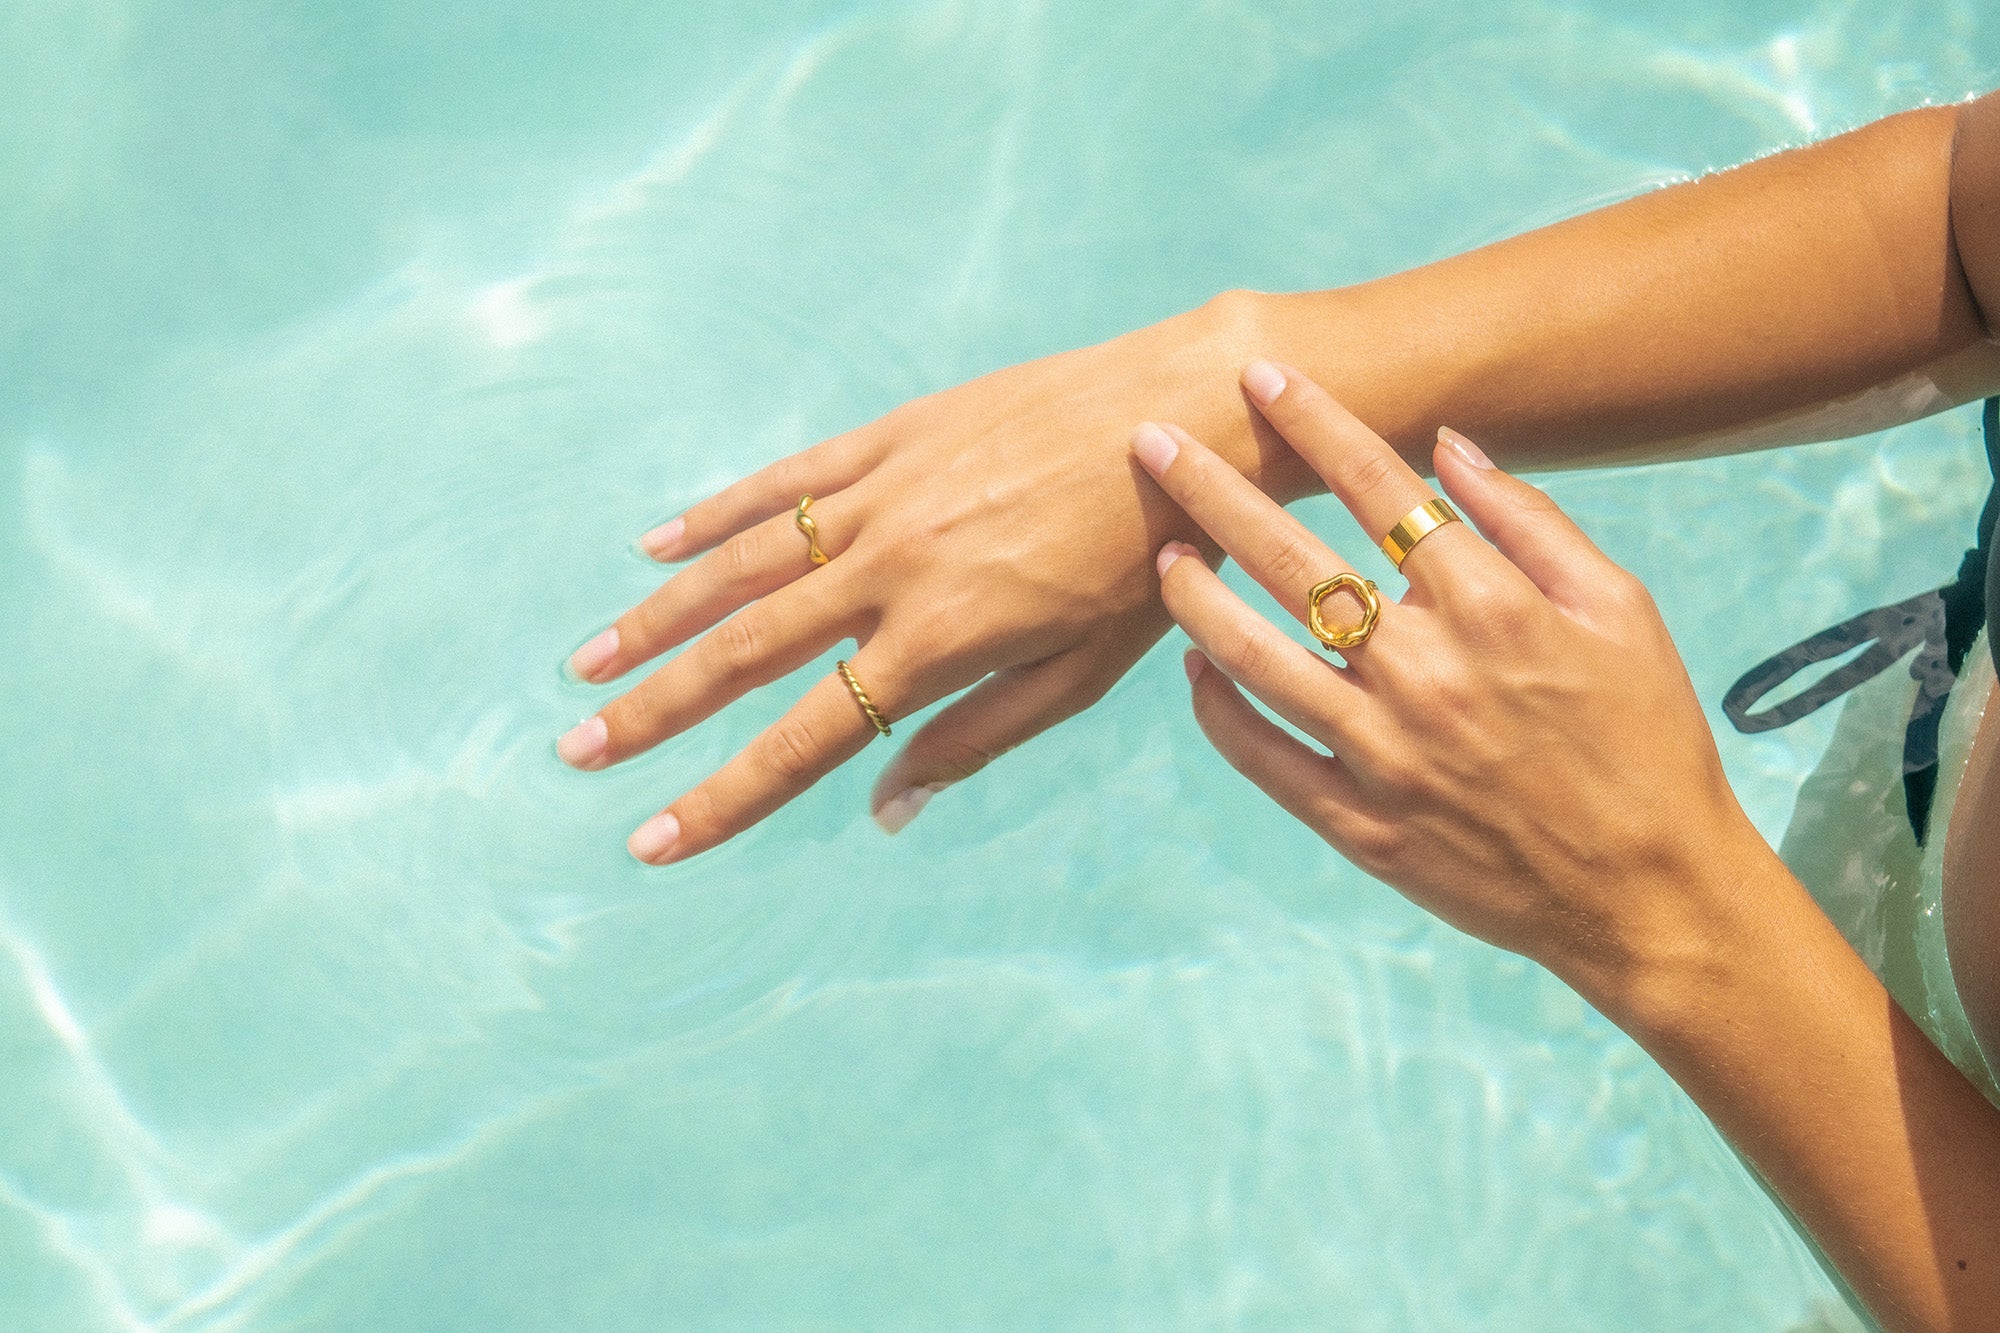 Swim In Jewelry waterproof jewelry and rings in a pool